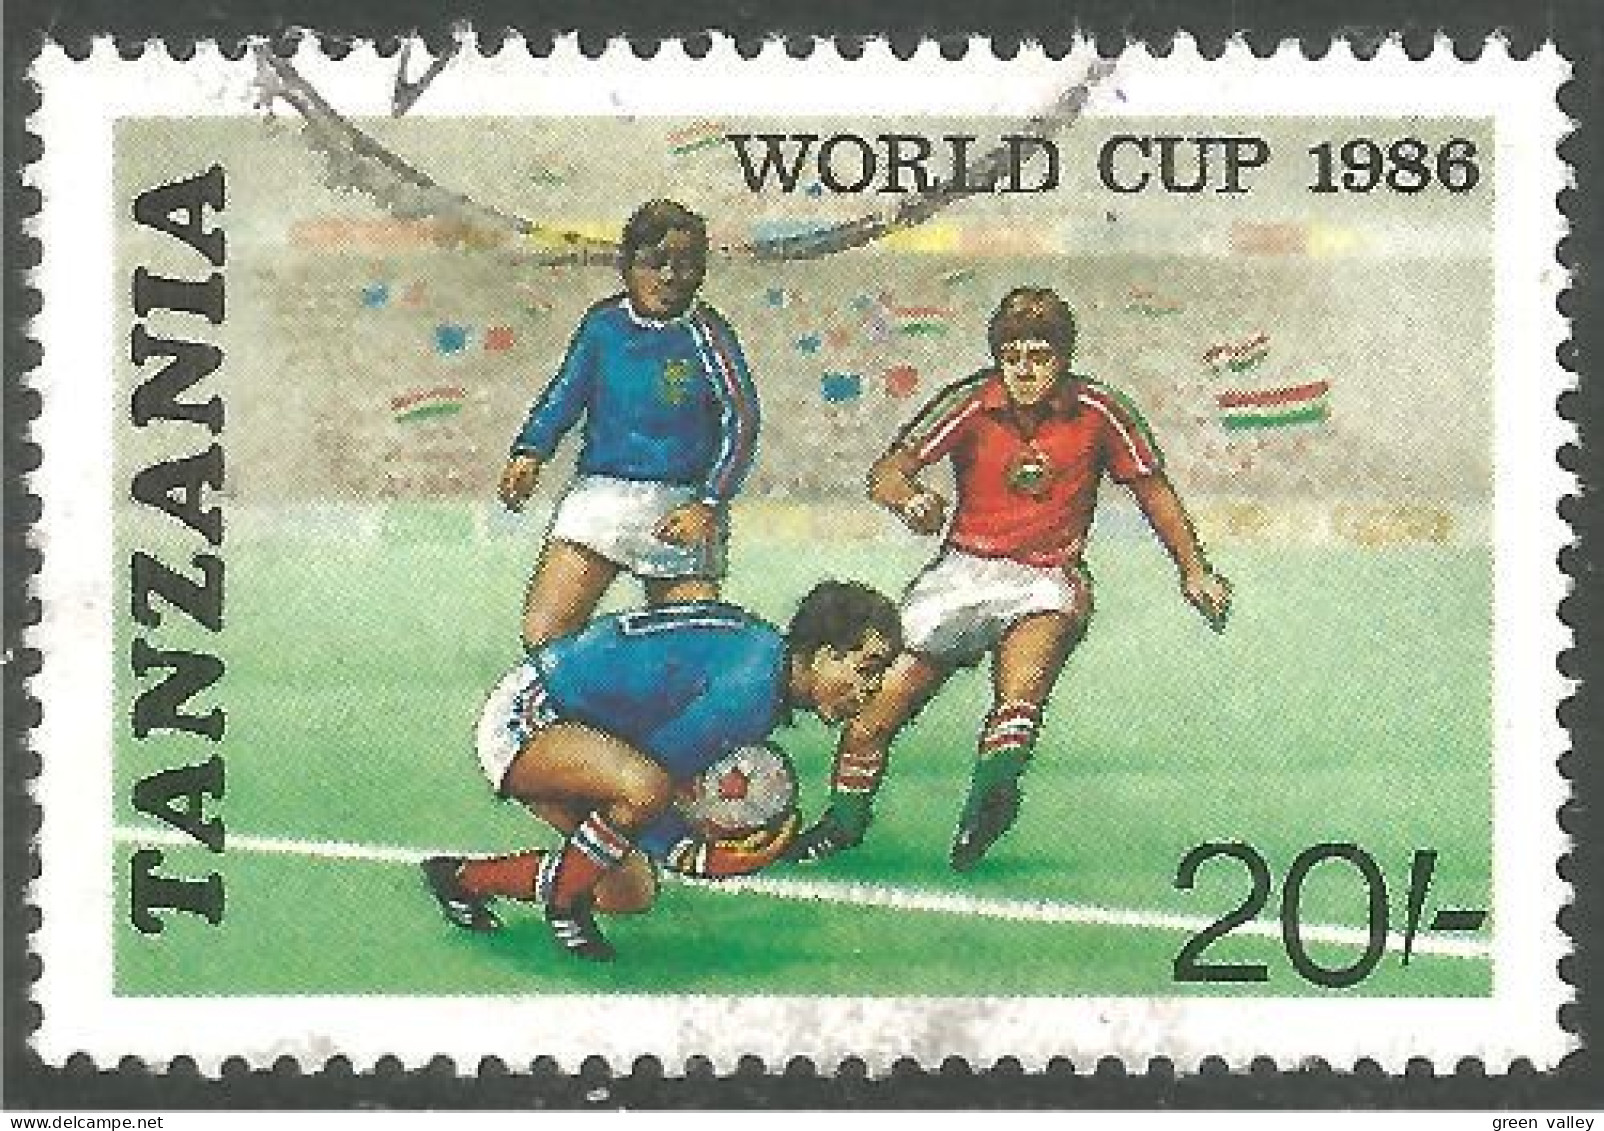 866 Tanzania Football Soccer World Cup 1986 (TZN-120a) - Tanzania (1964-...)